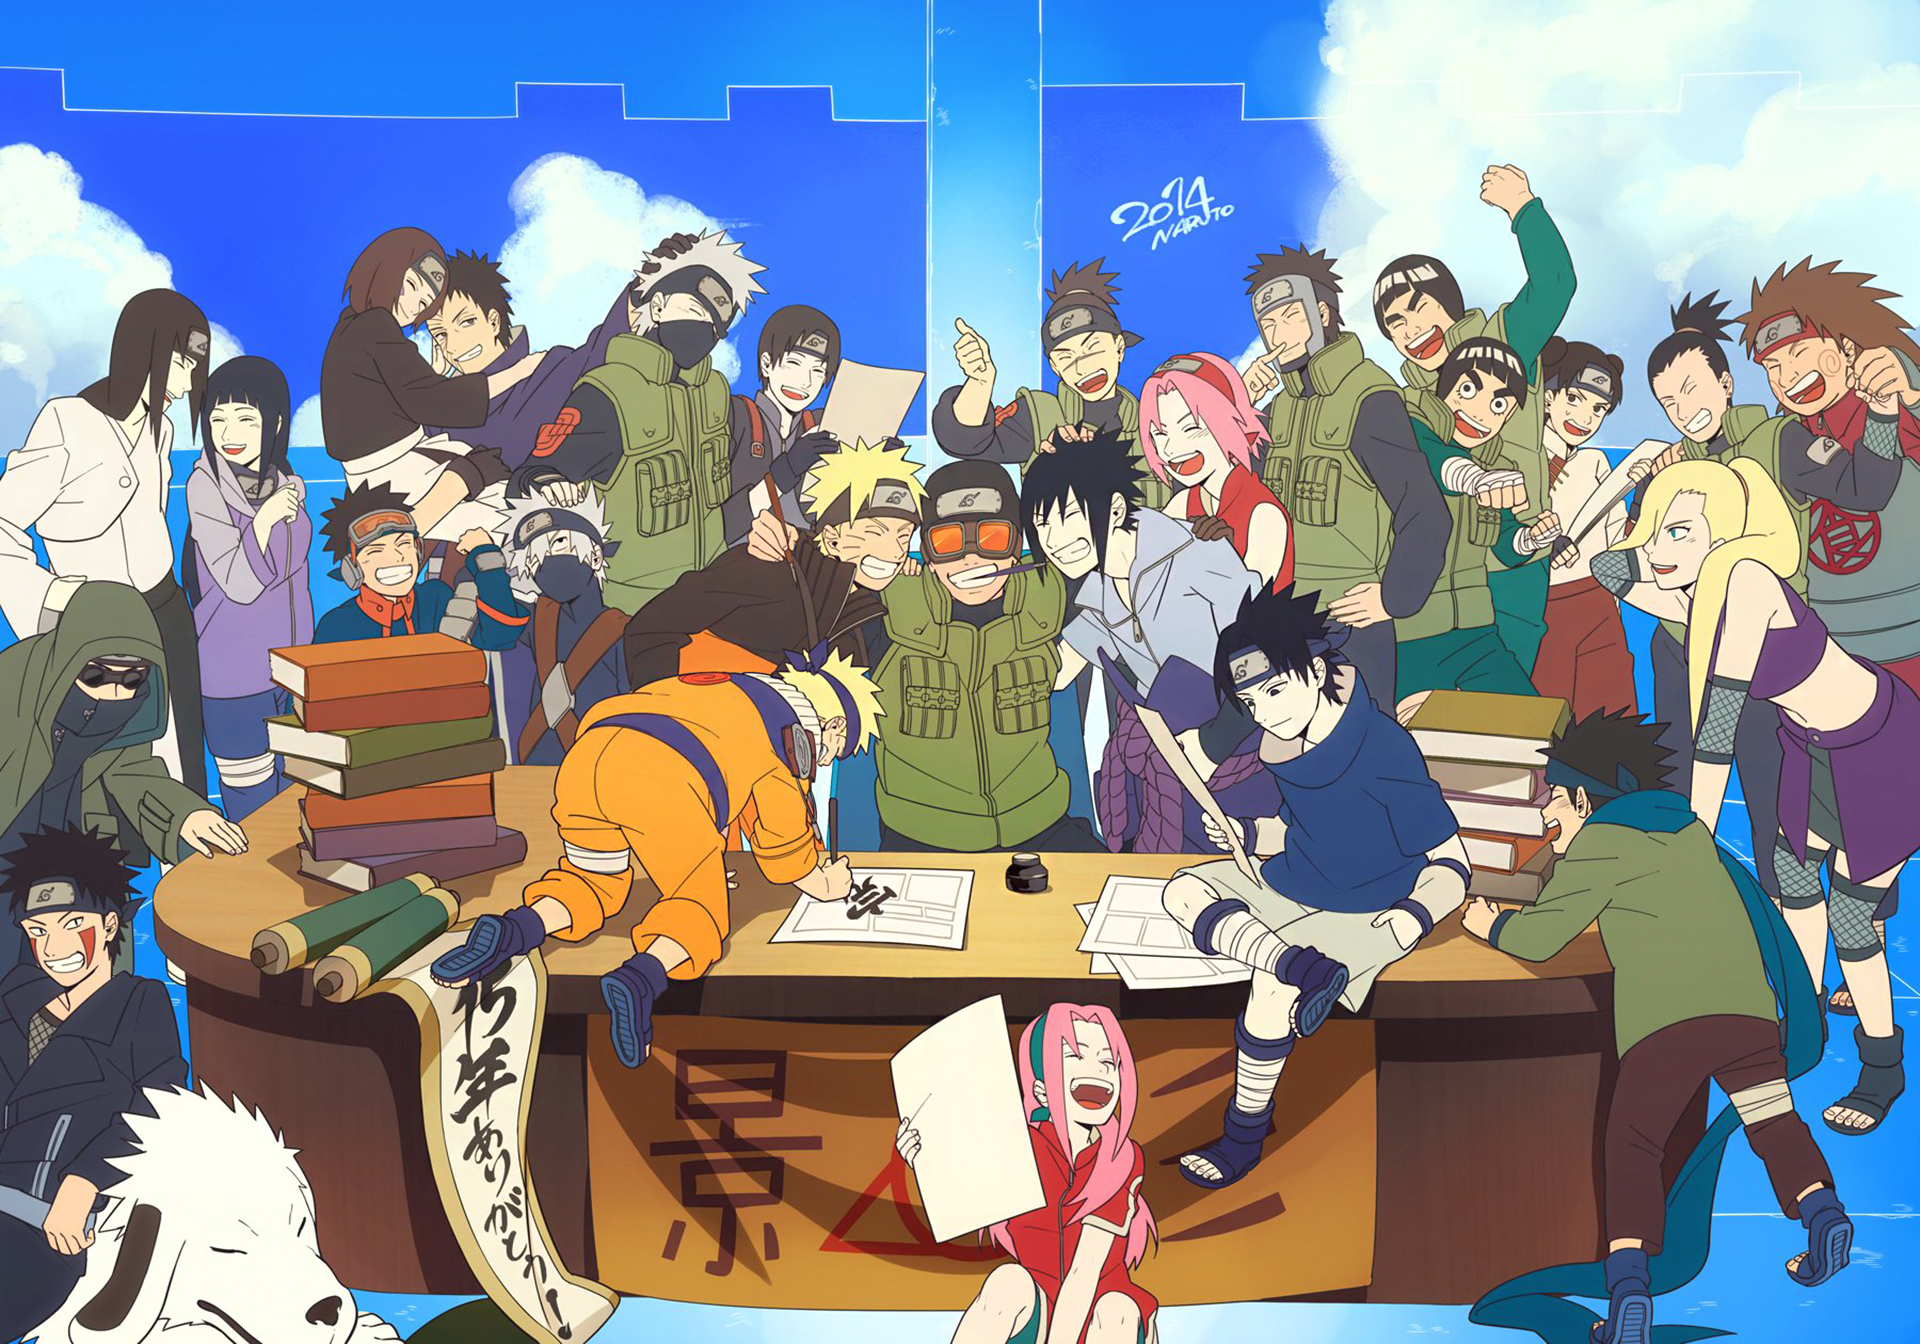 fond d'écran konoha,dessin animé,groupe social,communauté,dessin animé,anime